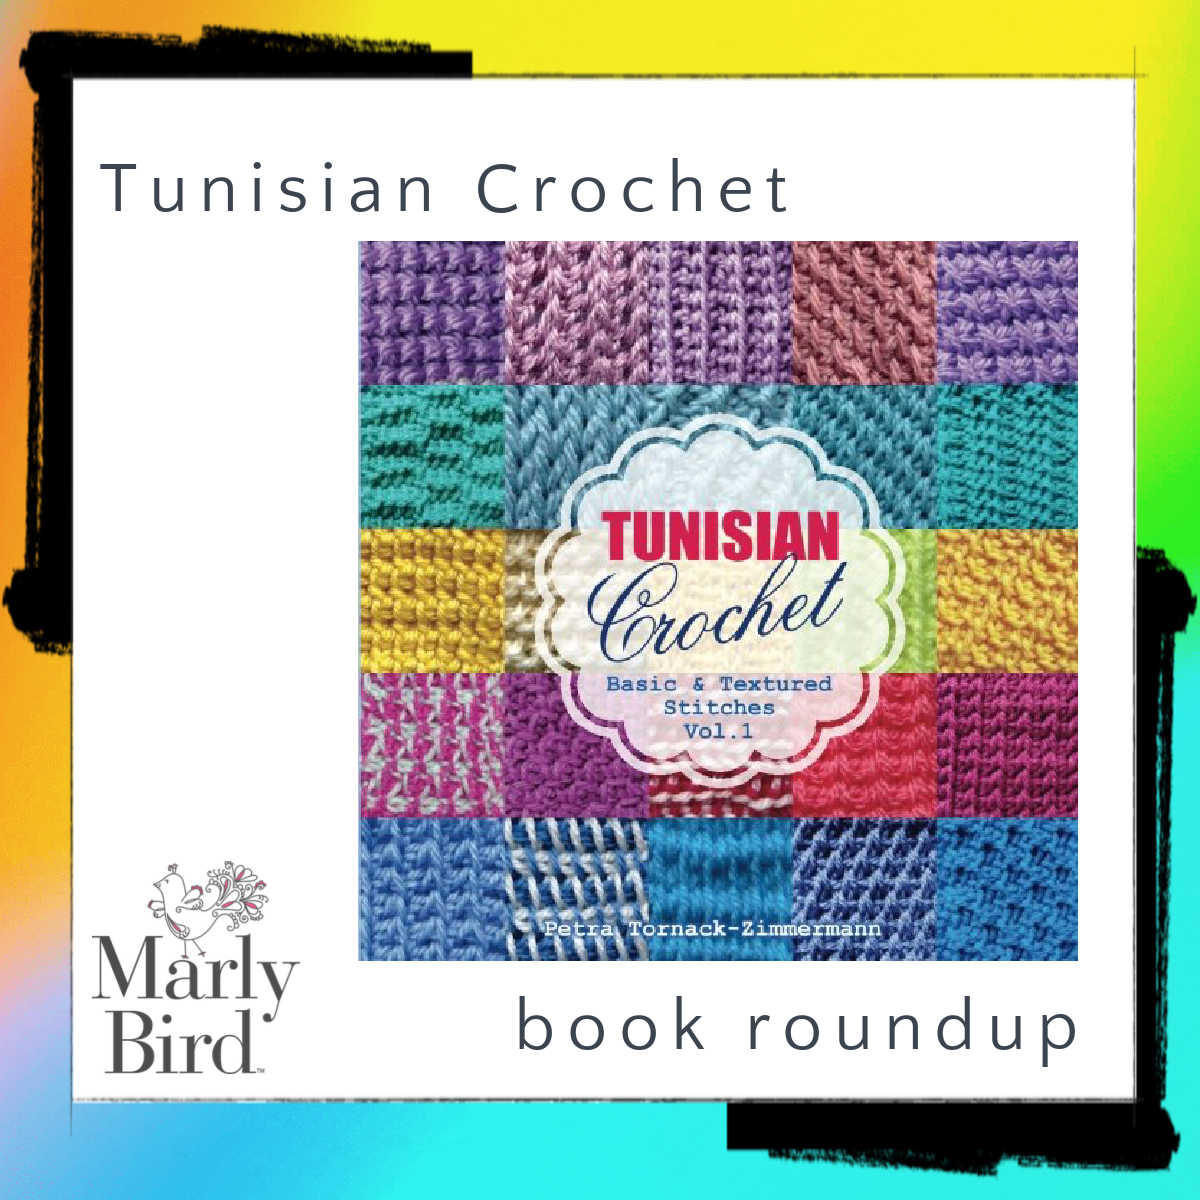 Tunisian crochet books